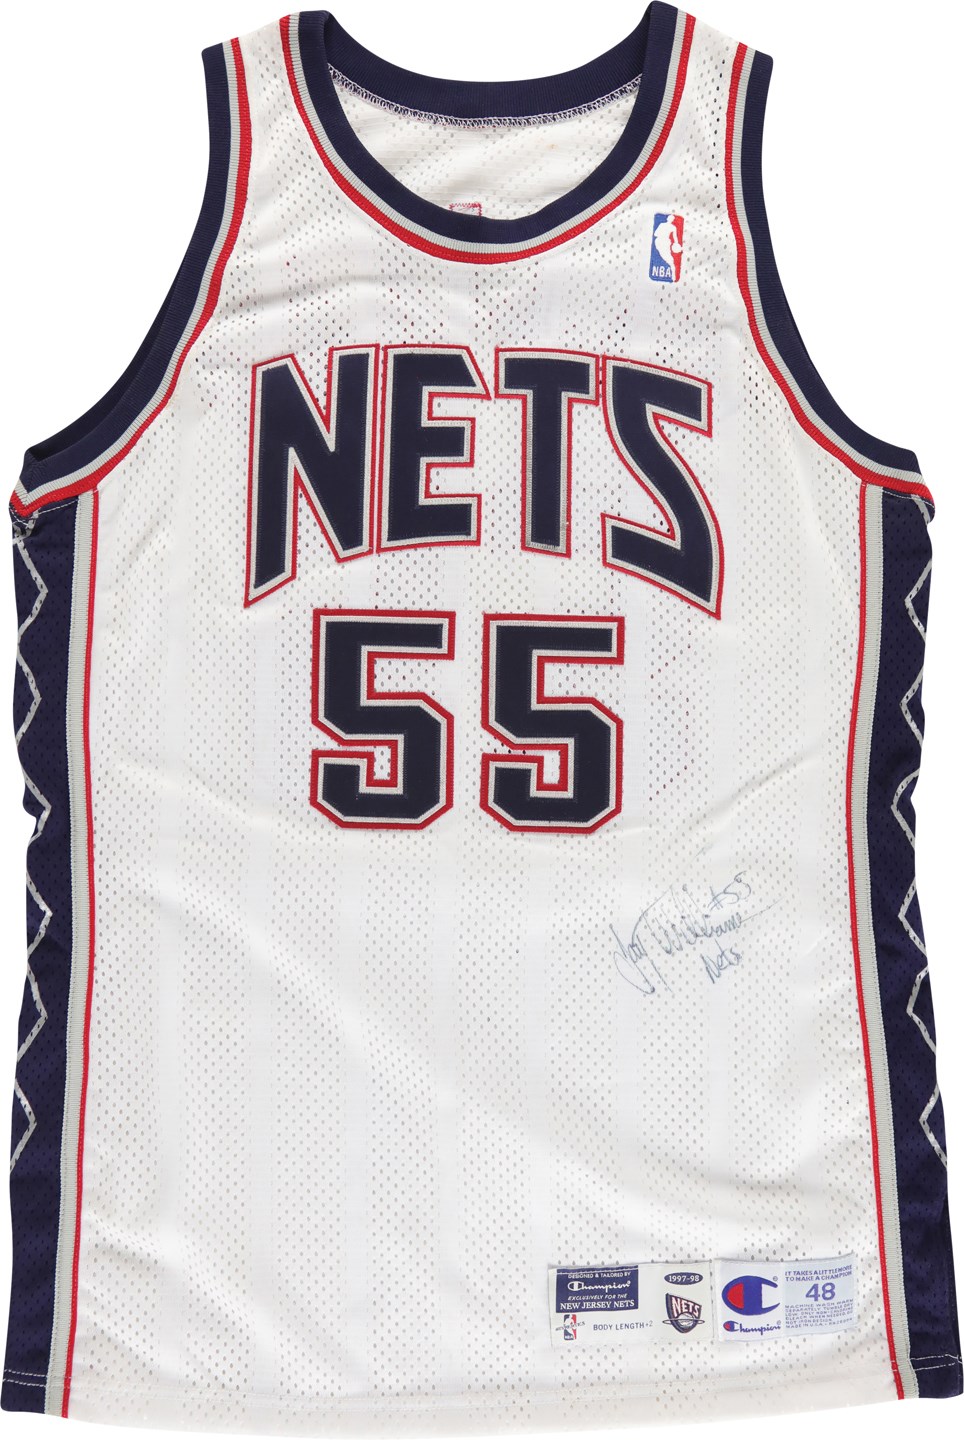 - 1997-98 Jayson Williams New Jersey Nets Game Worn Jersey (PSA)